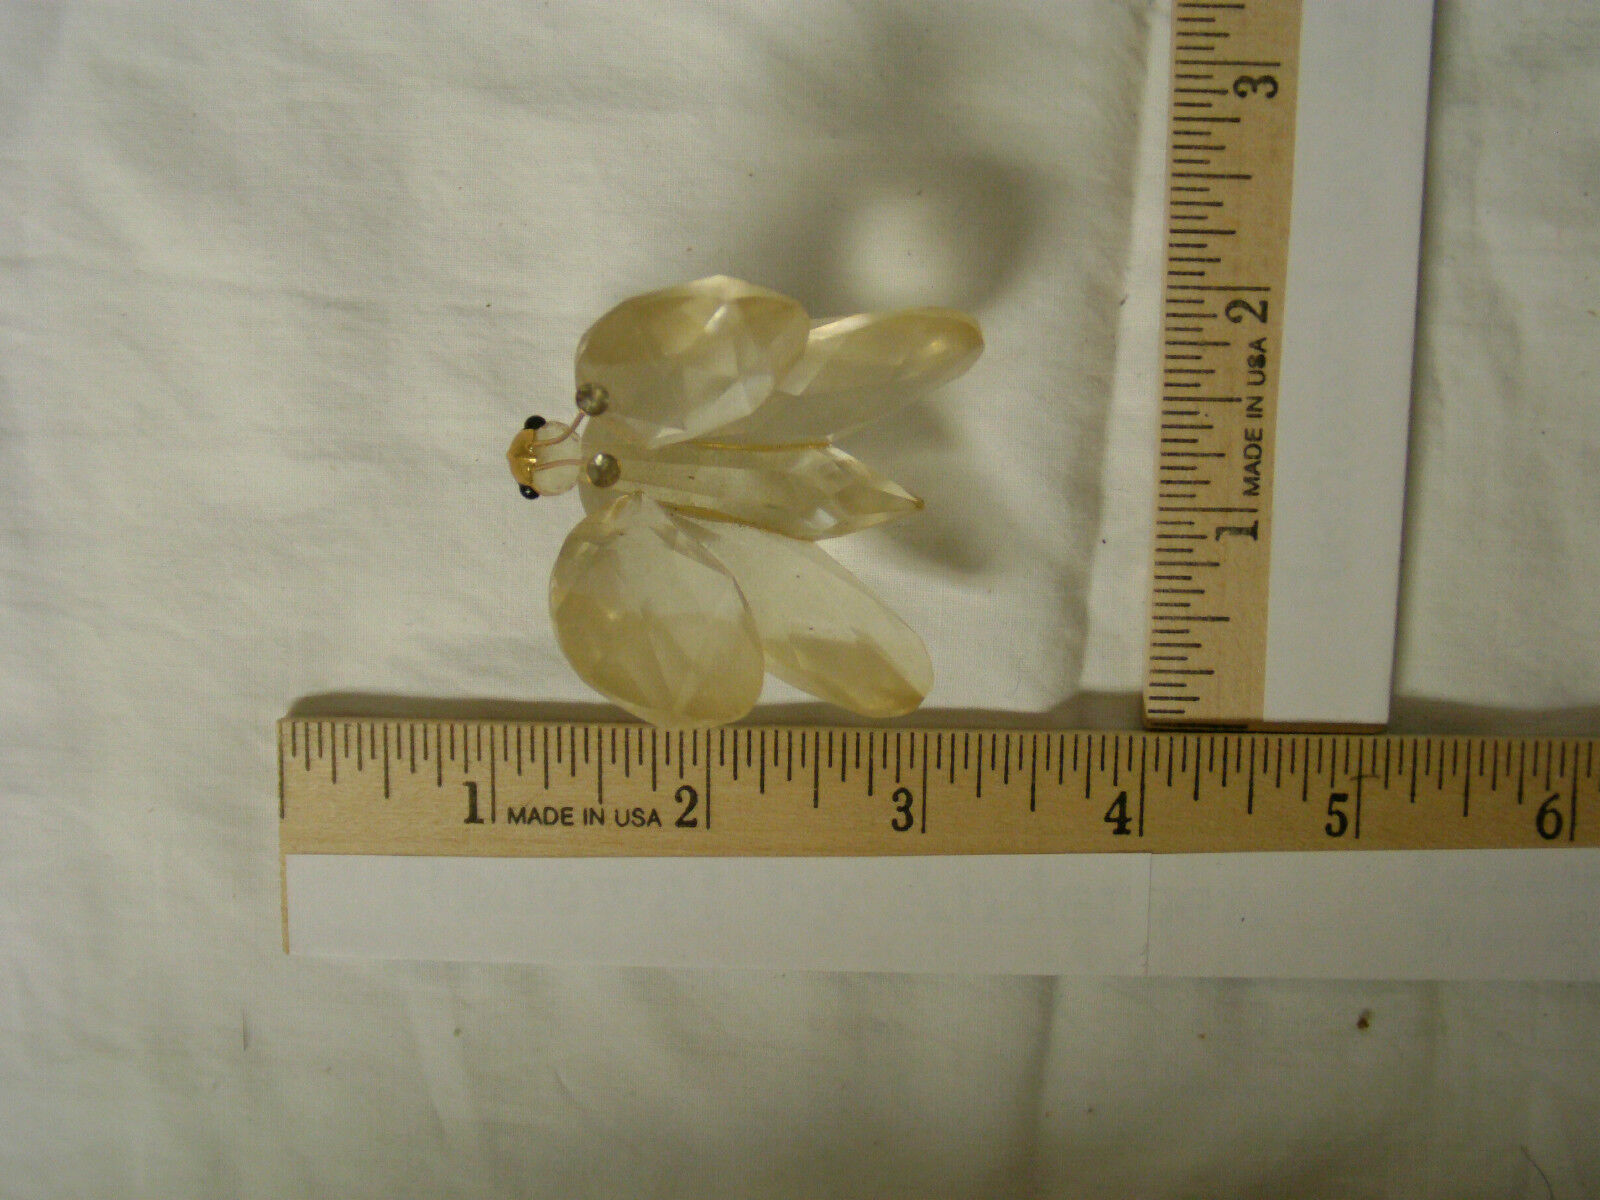 Original Marked Vintage Swarovski Crystal Figure, Lots of Crystals, Gold Accents